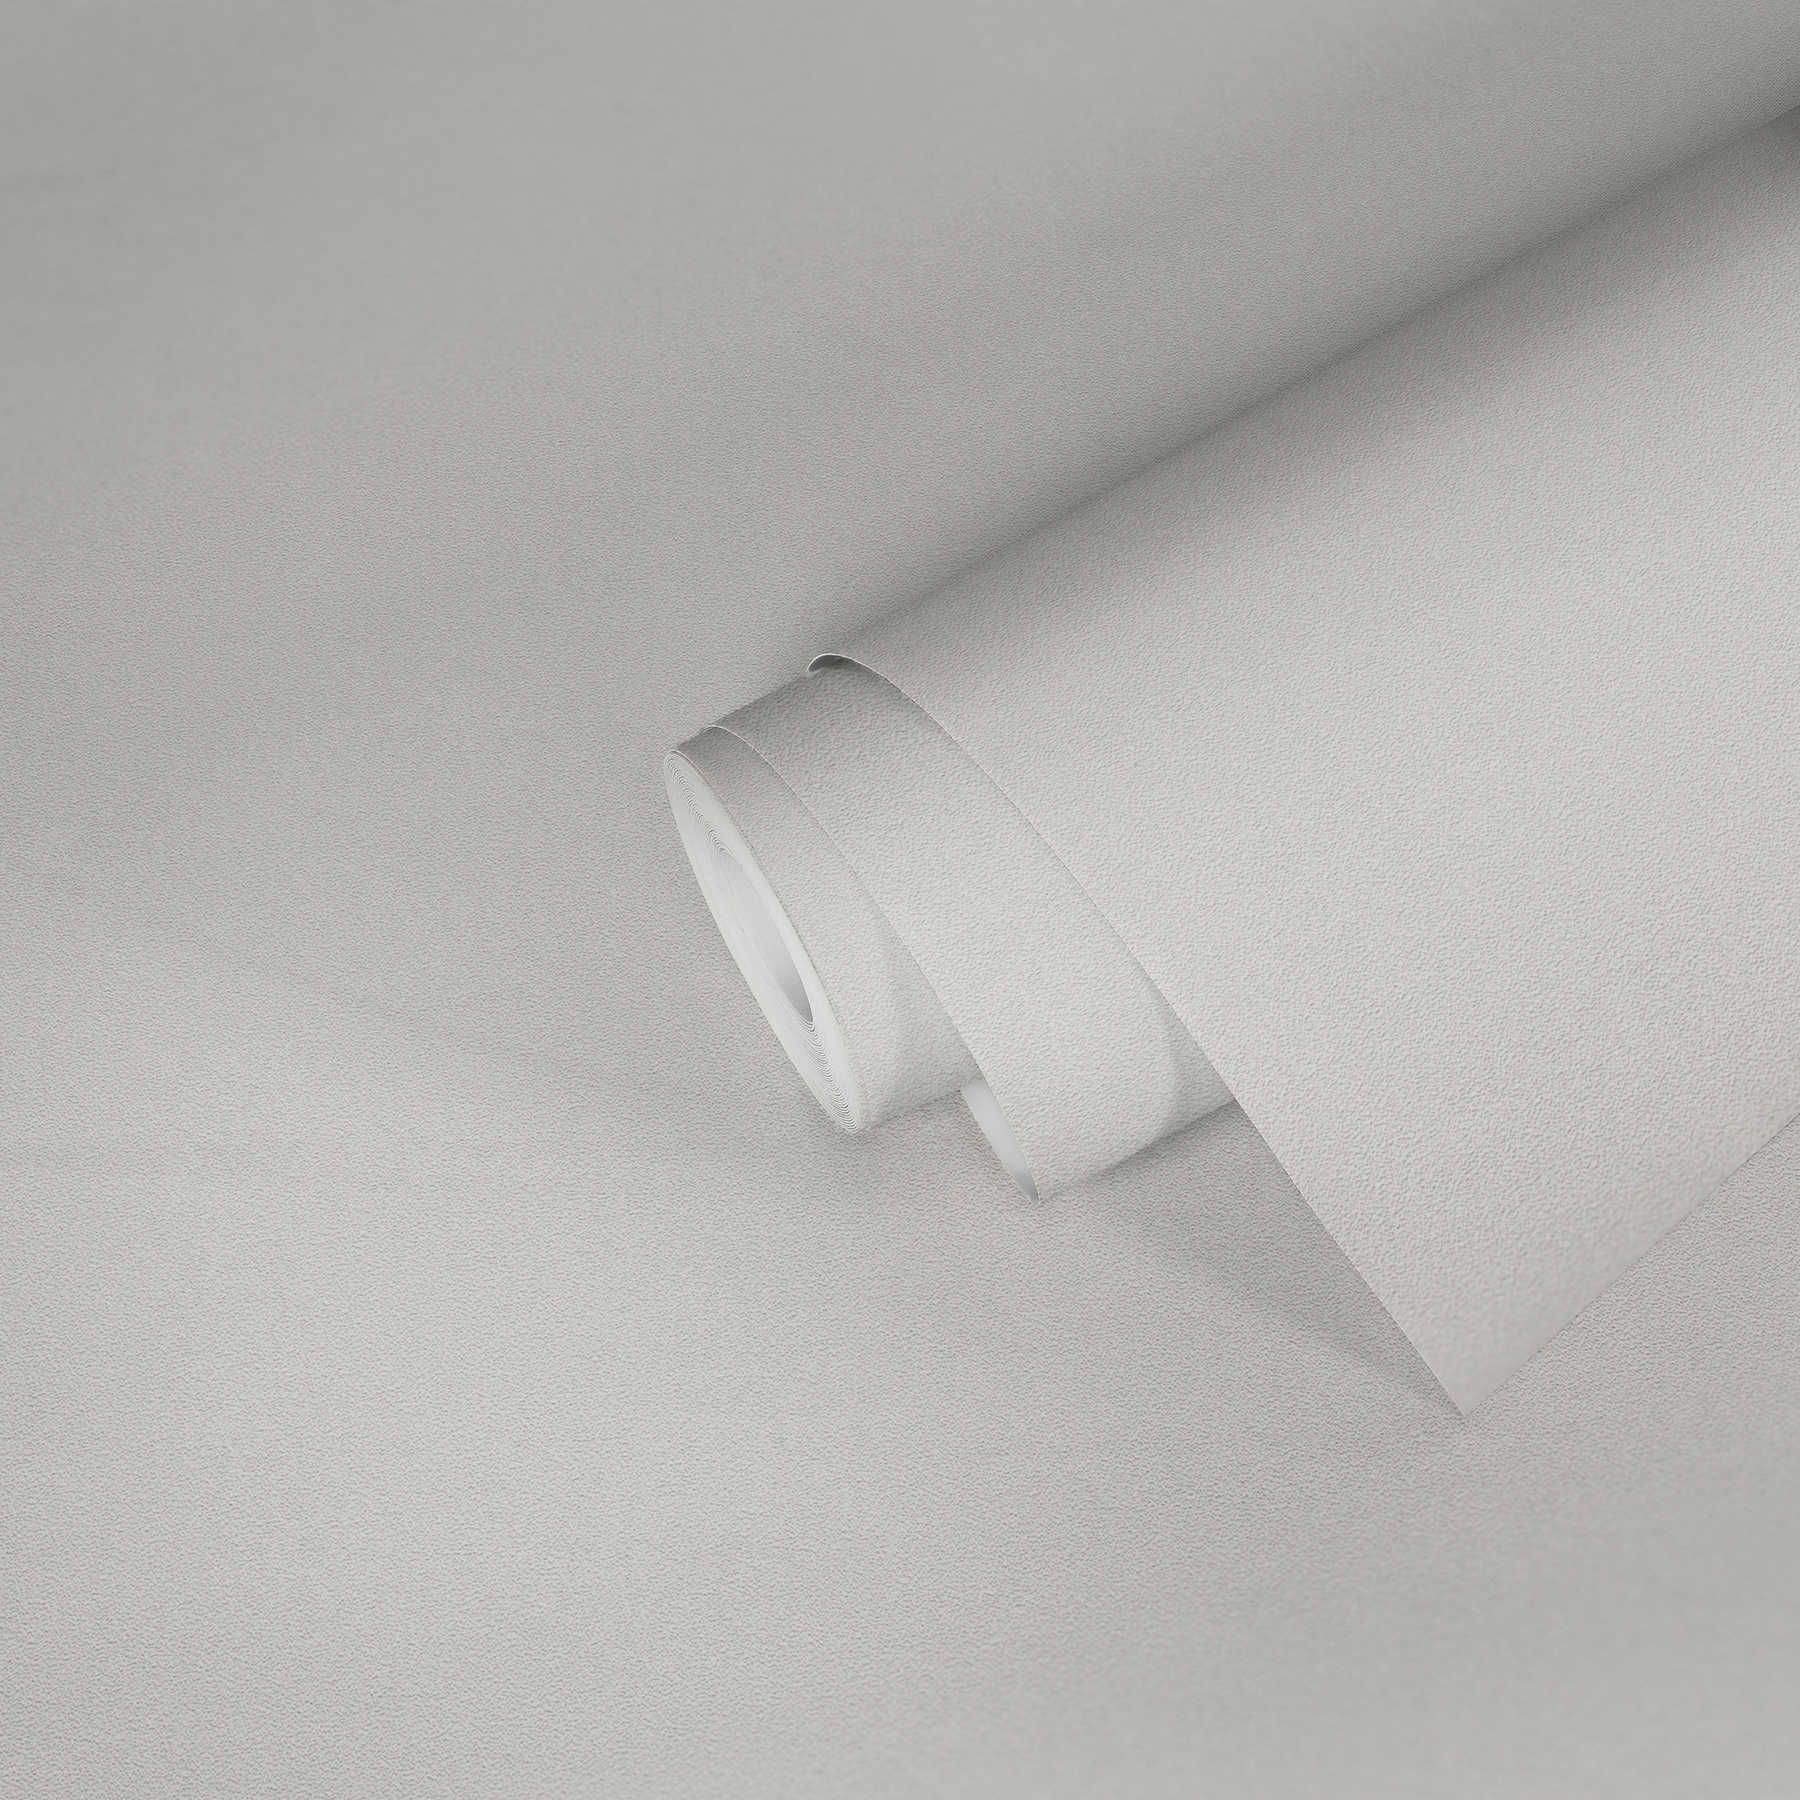             Neutral non-woven wallpaper plain, light & smooth - white
        